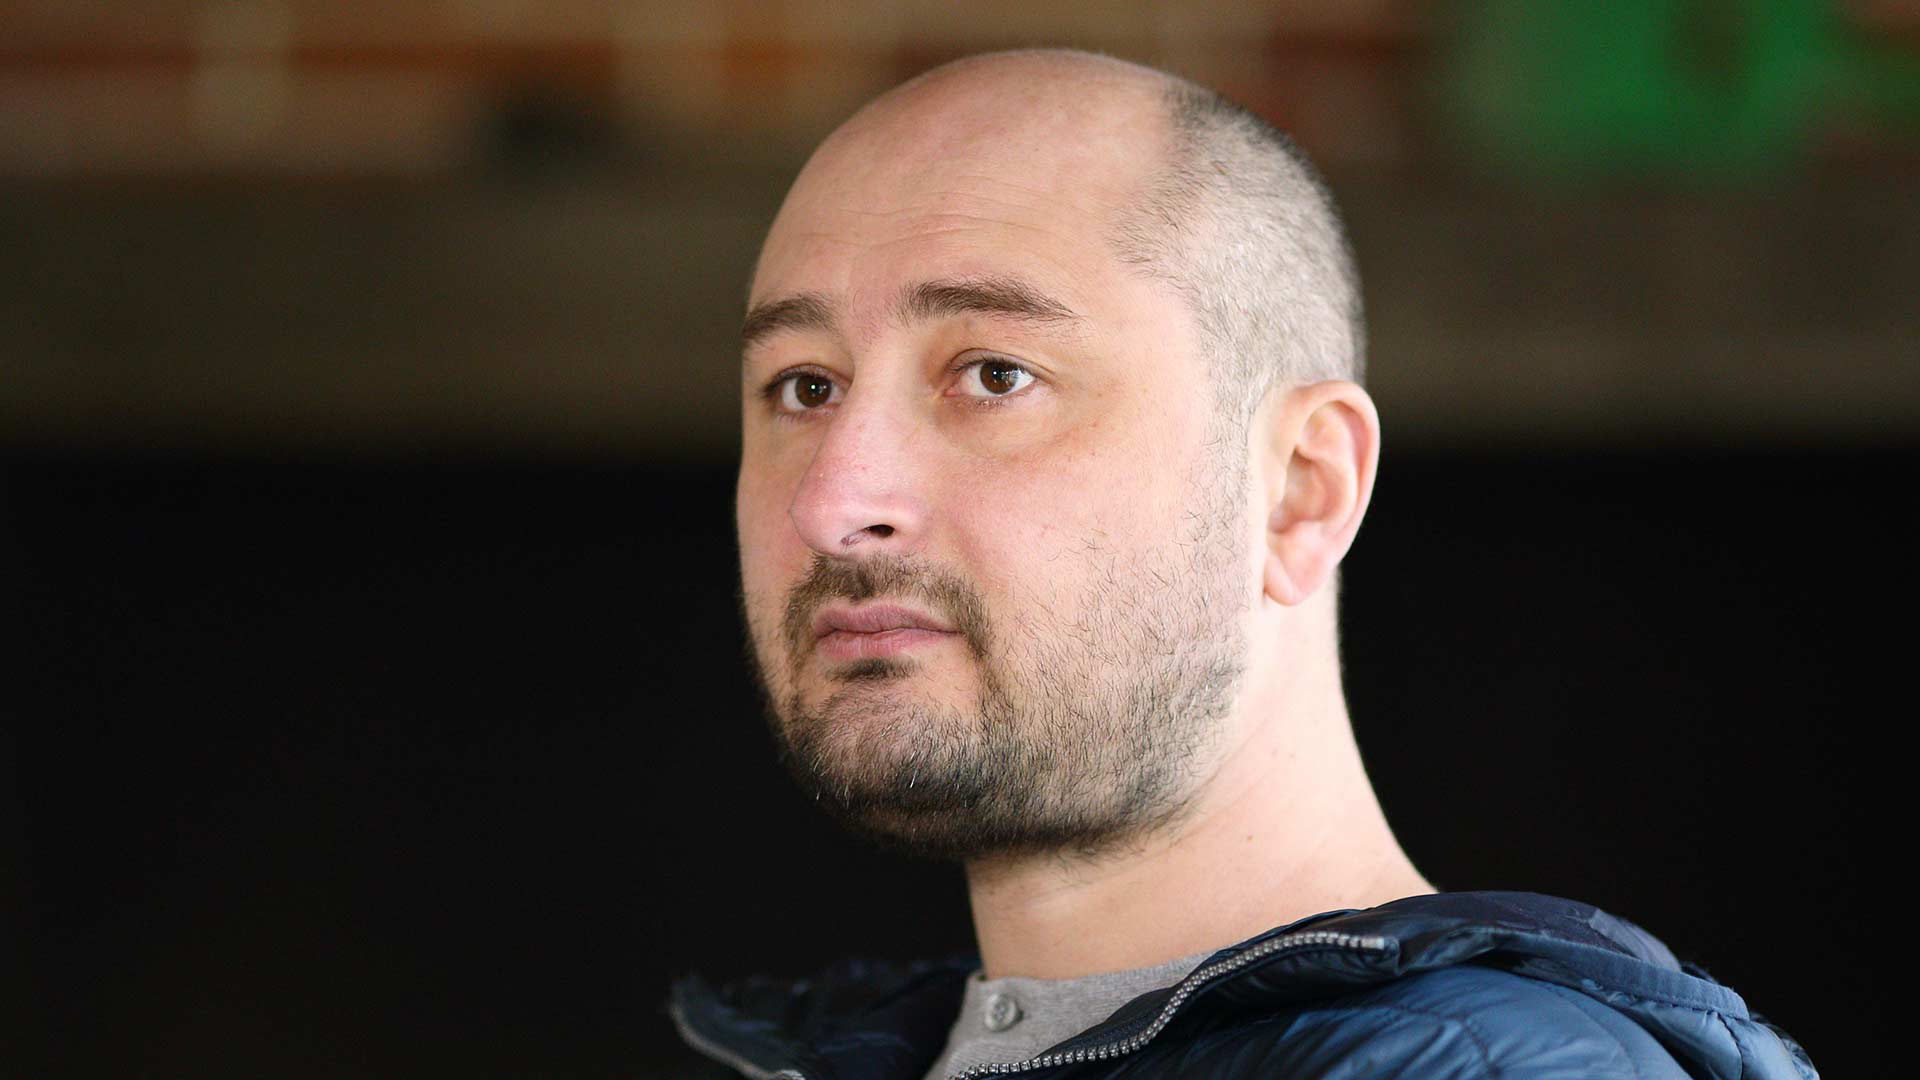 El periodista de cuyo asesinato Ucrania acusaba a Rusia está vivo